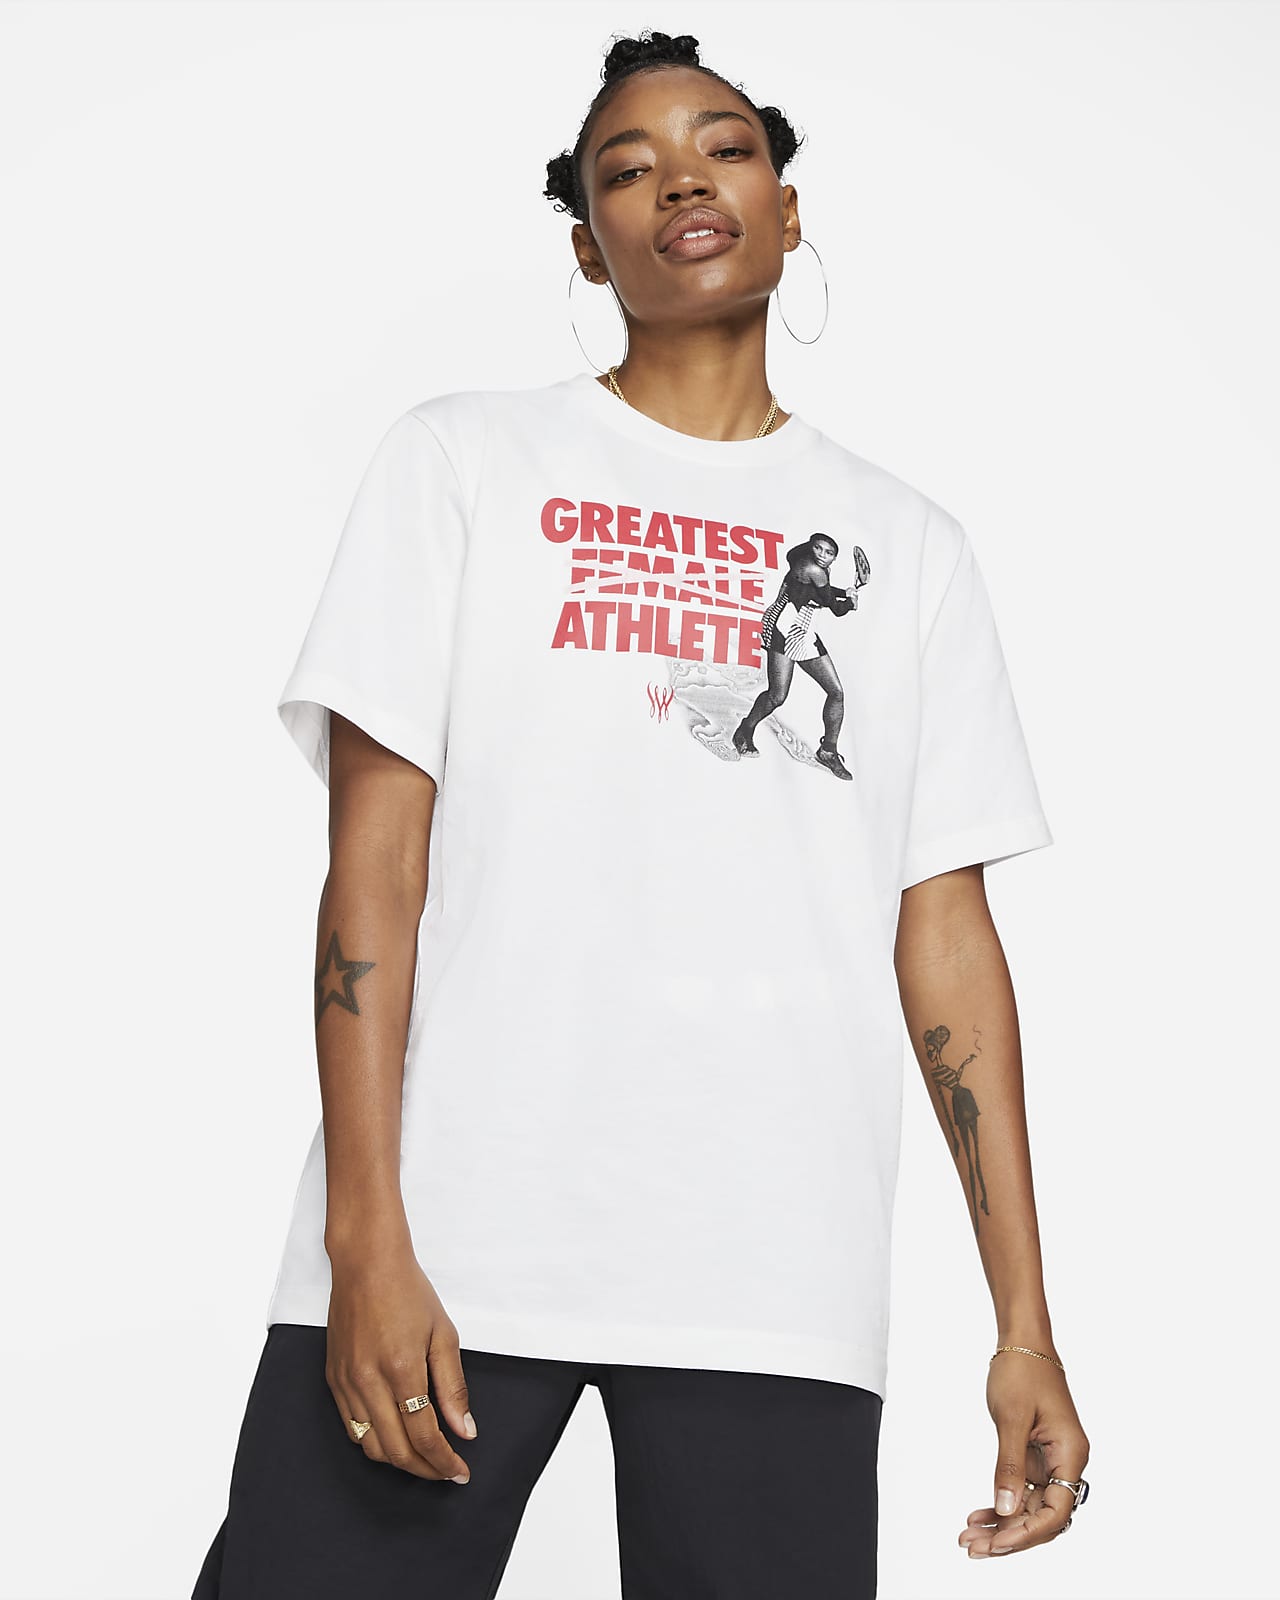 Buy > nike athlete t shirt white > in stock